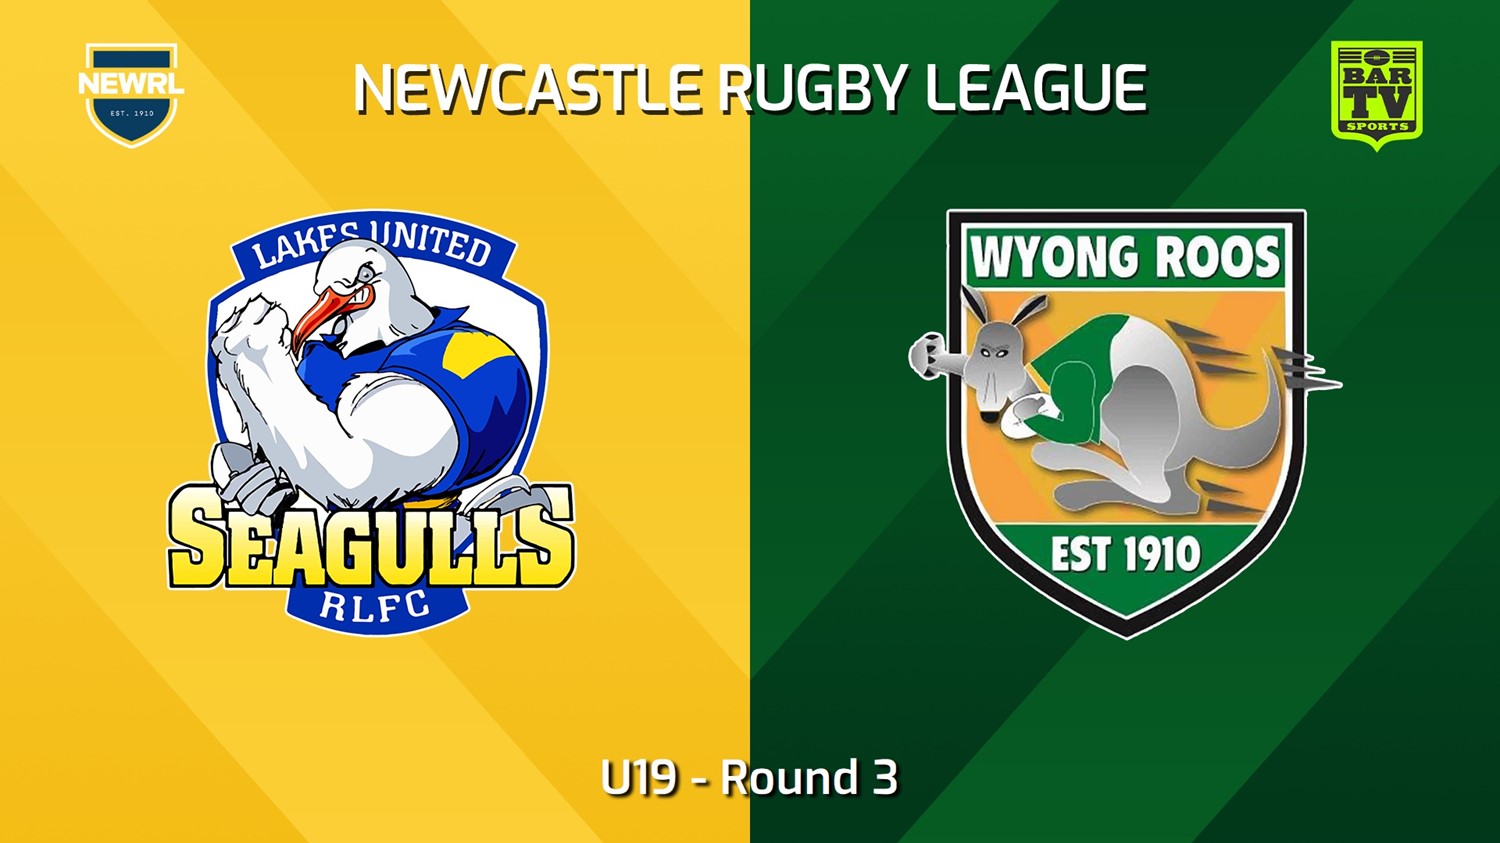 240428-video-Newcastle RL Round 3 - U19 - Lakes United Seagulls v Wyong Roos Slate Image